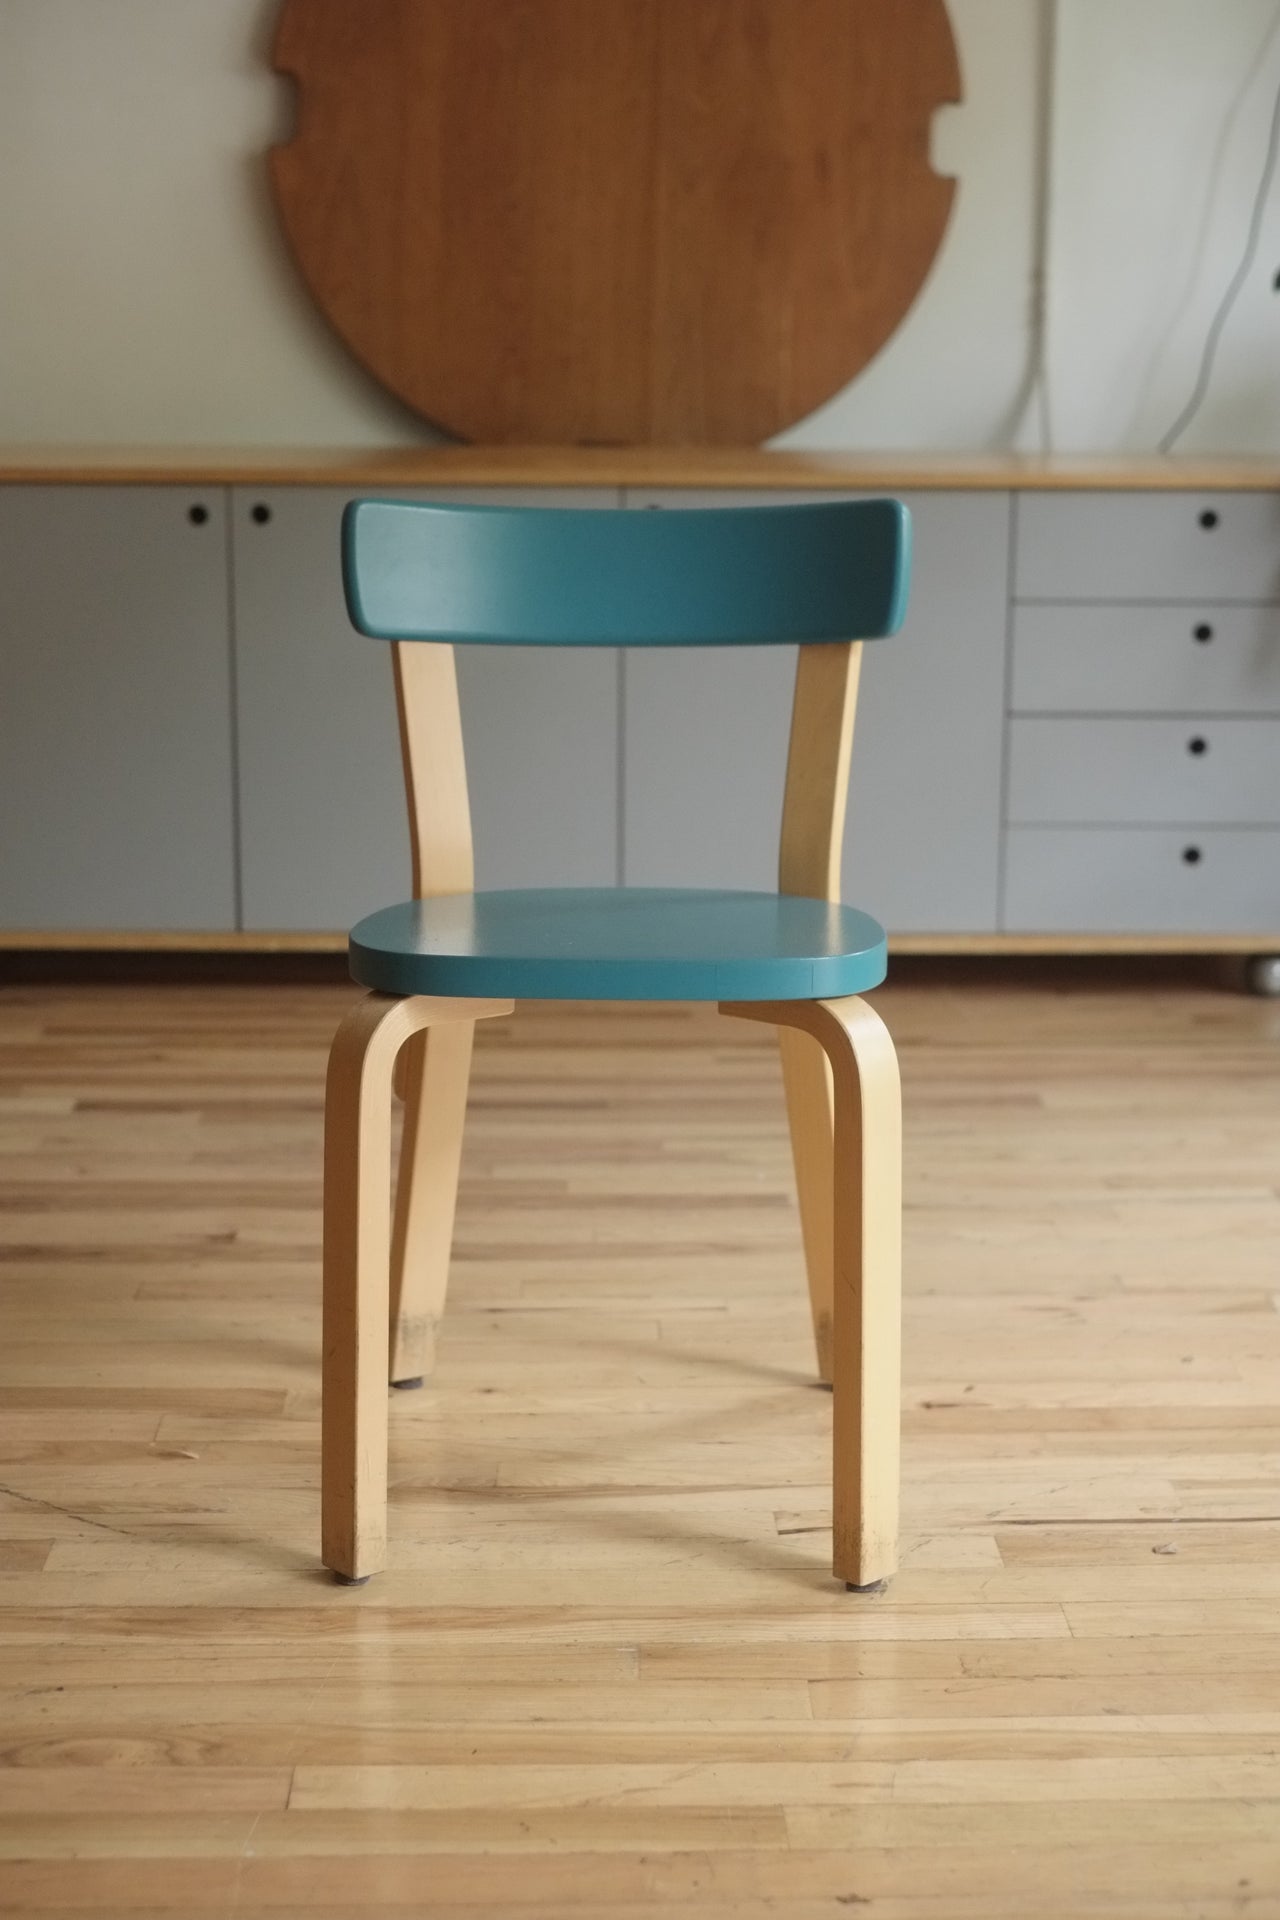 (B-Stock) Chair 69 by Alvar Aalto for Artek (Teal)